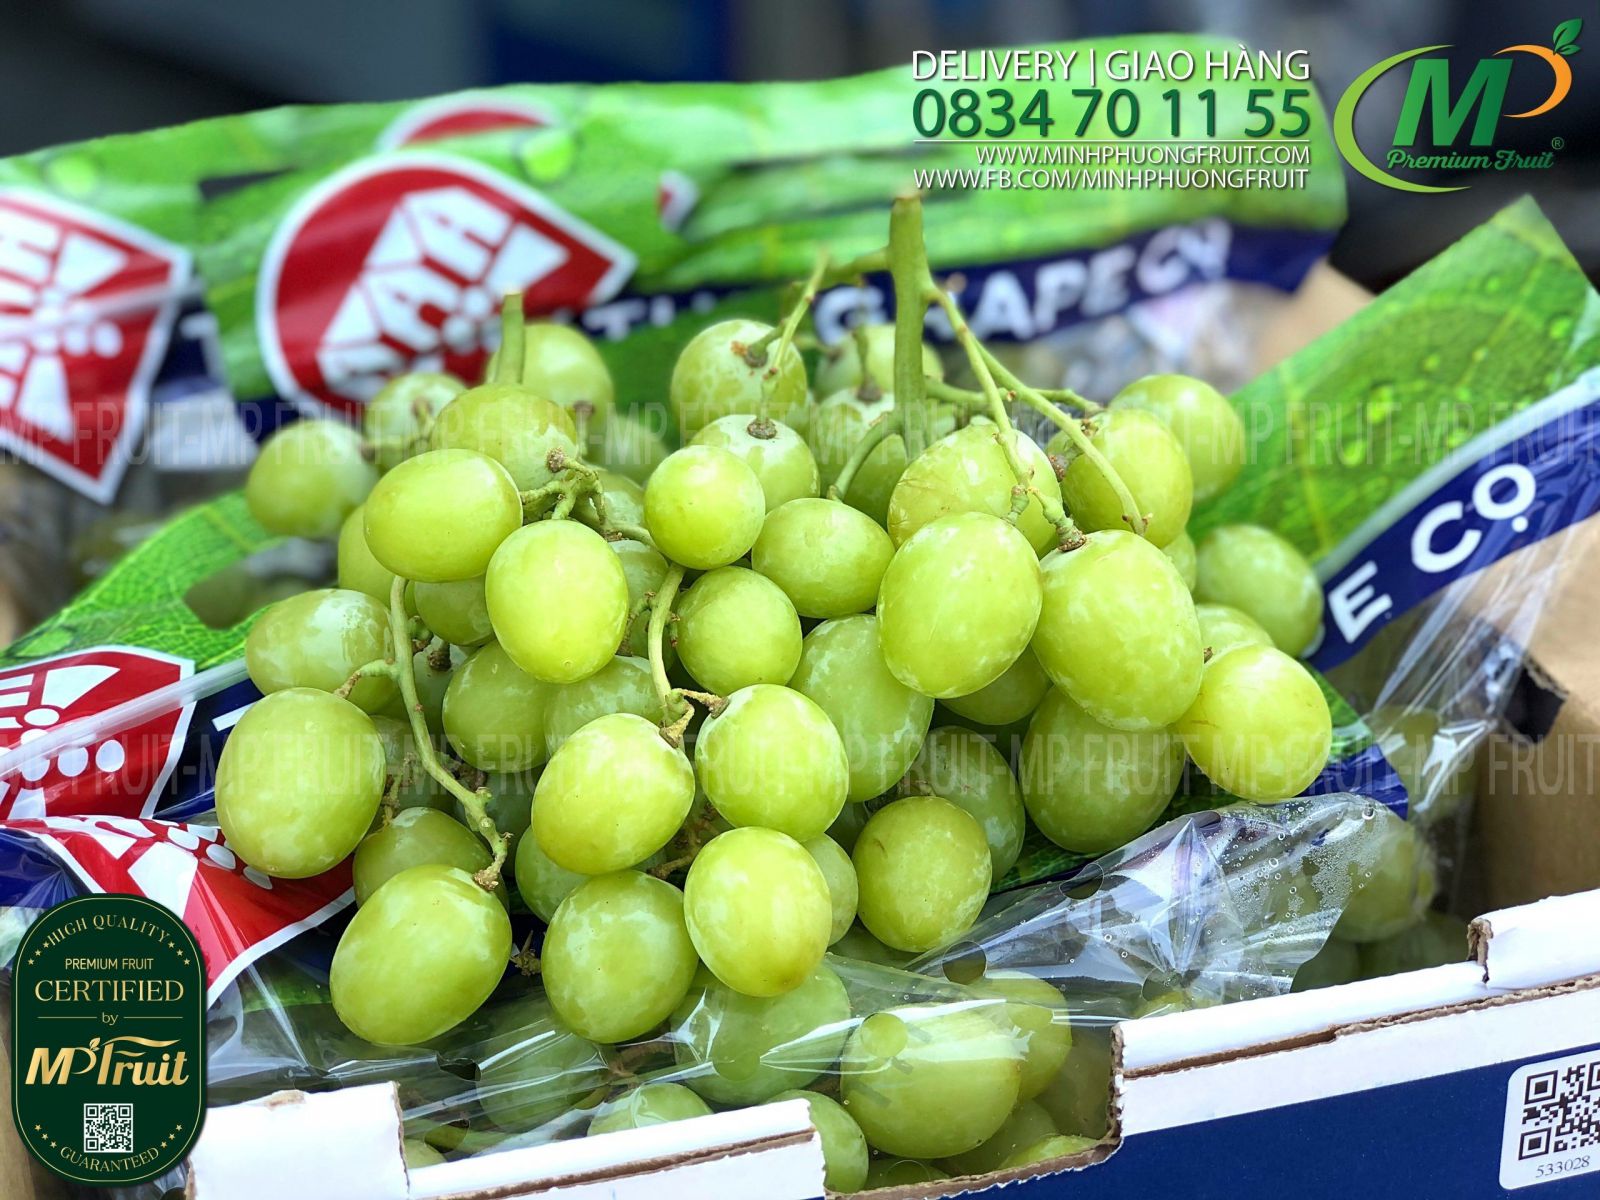 Nho Xanh Autumn Crisp Nam Phi | The Grape Co tại MP Fruits